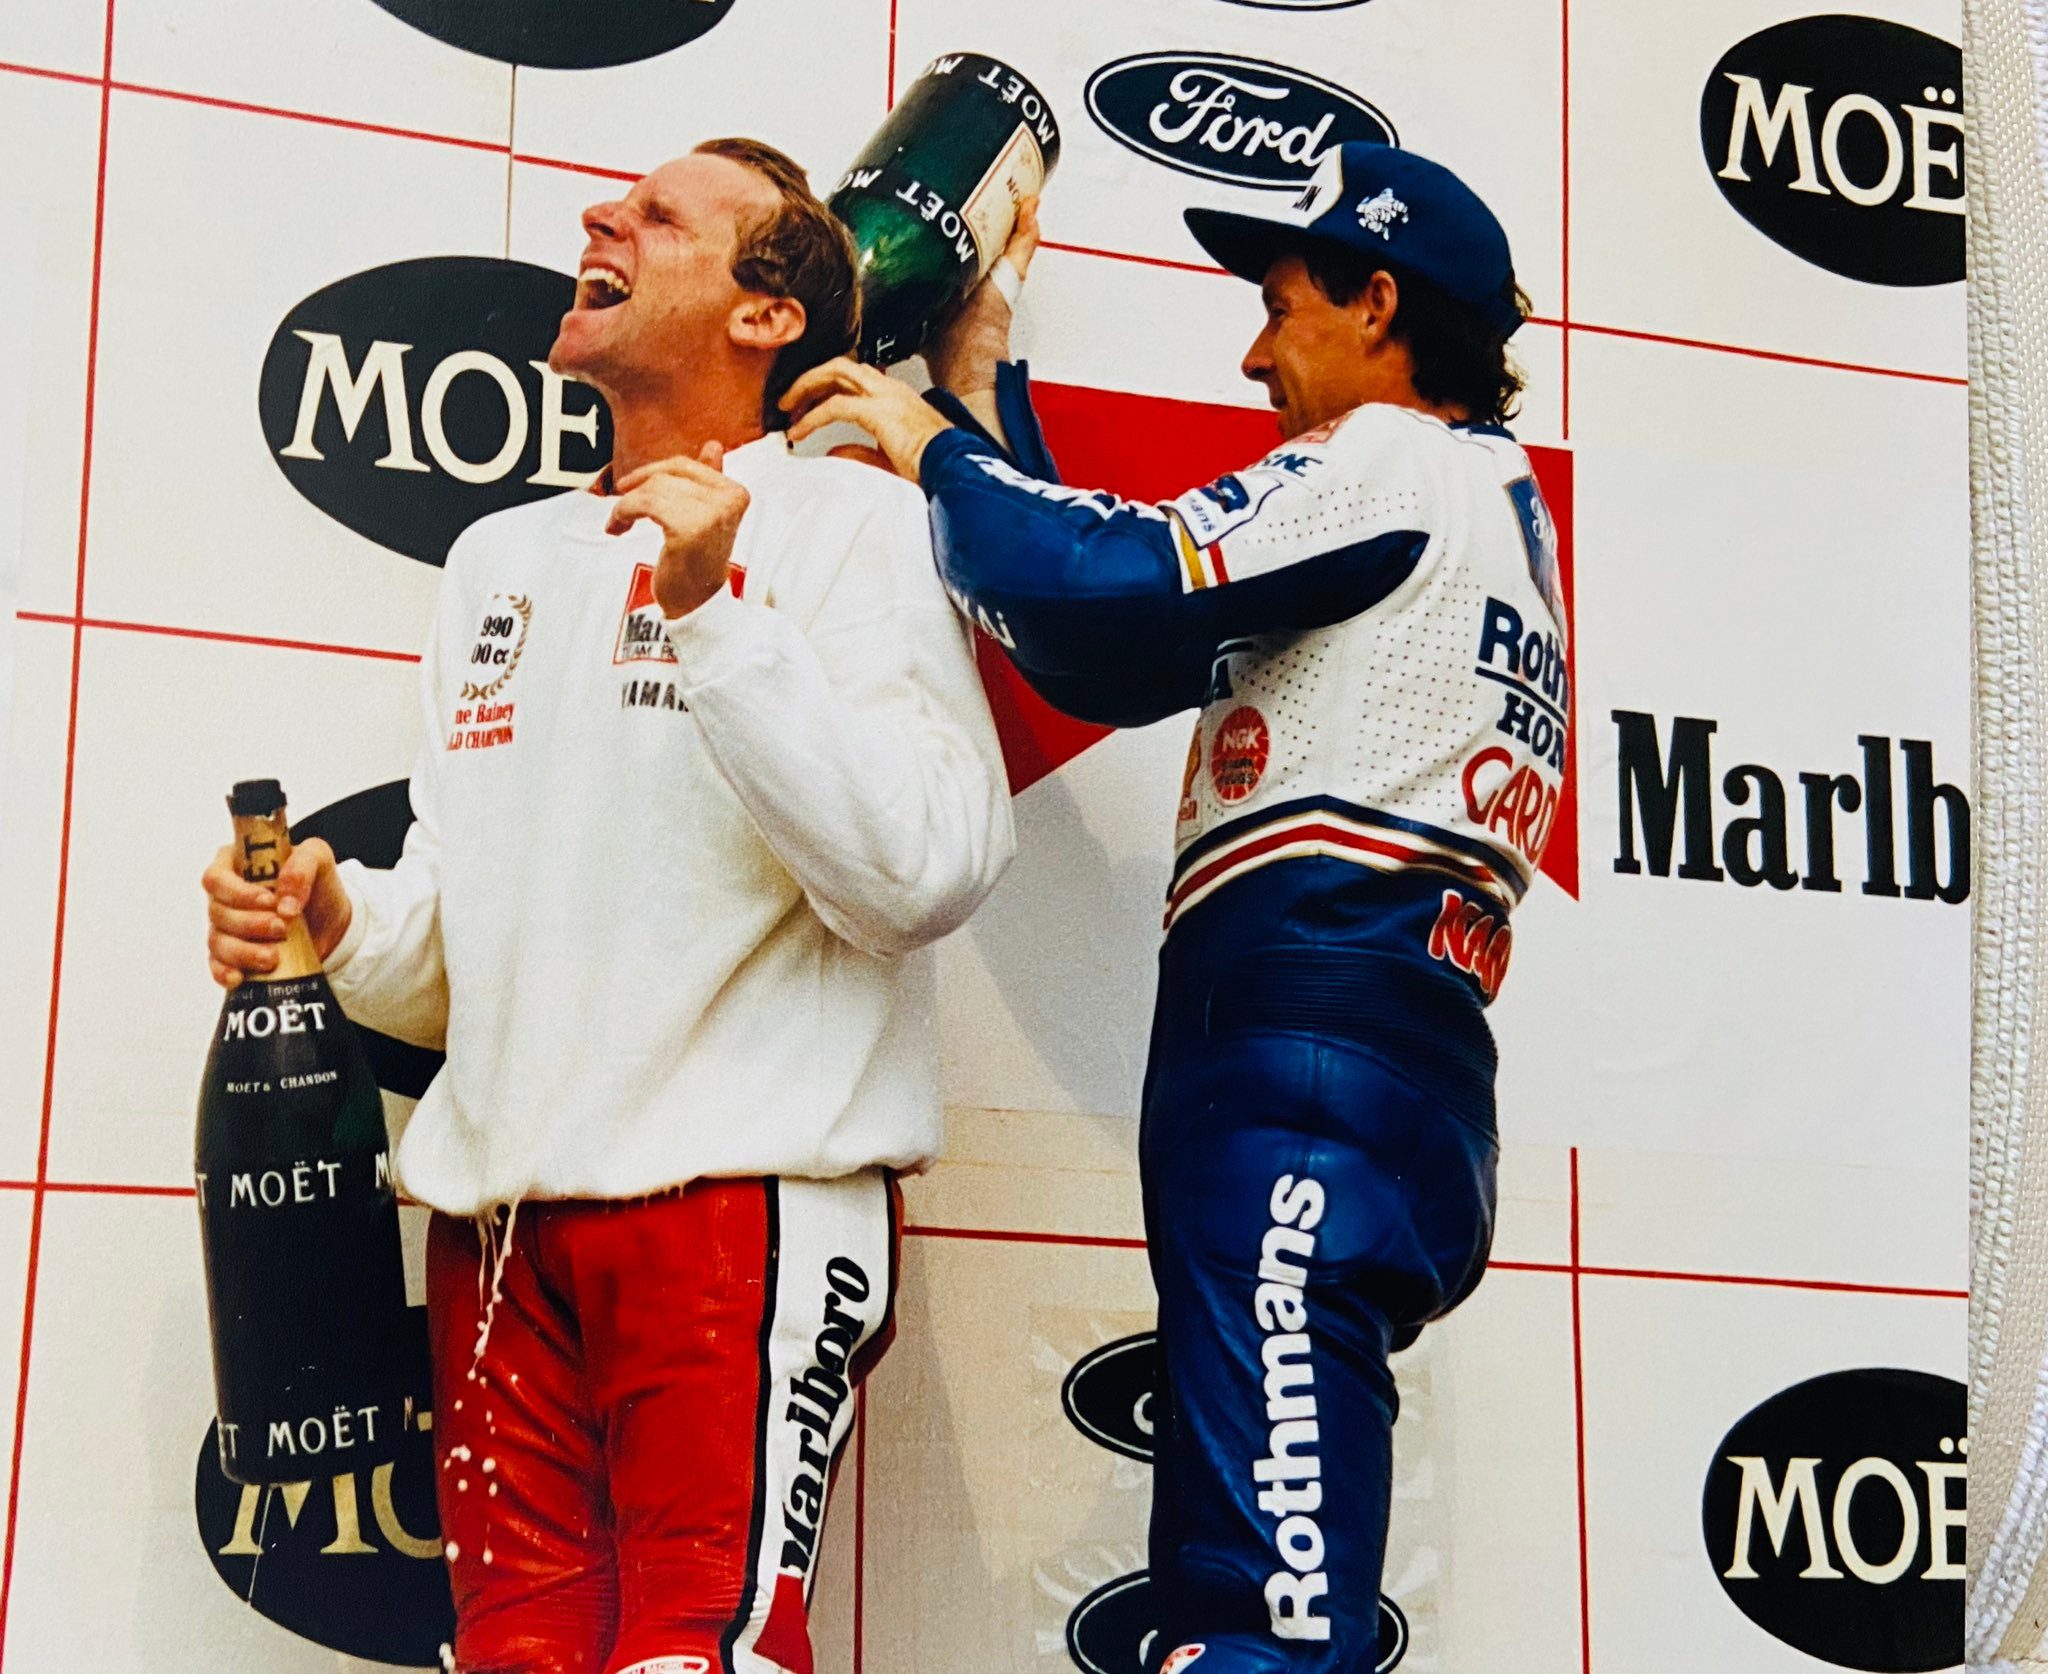 Wayne Rainey at the Czech GP in 1990